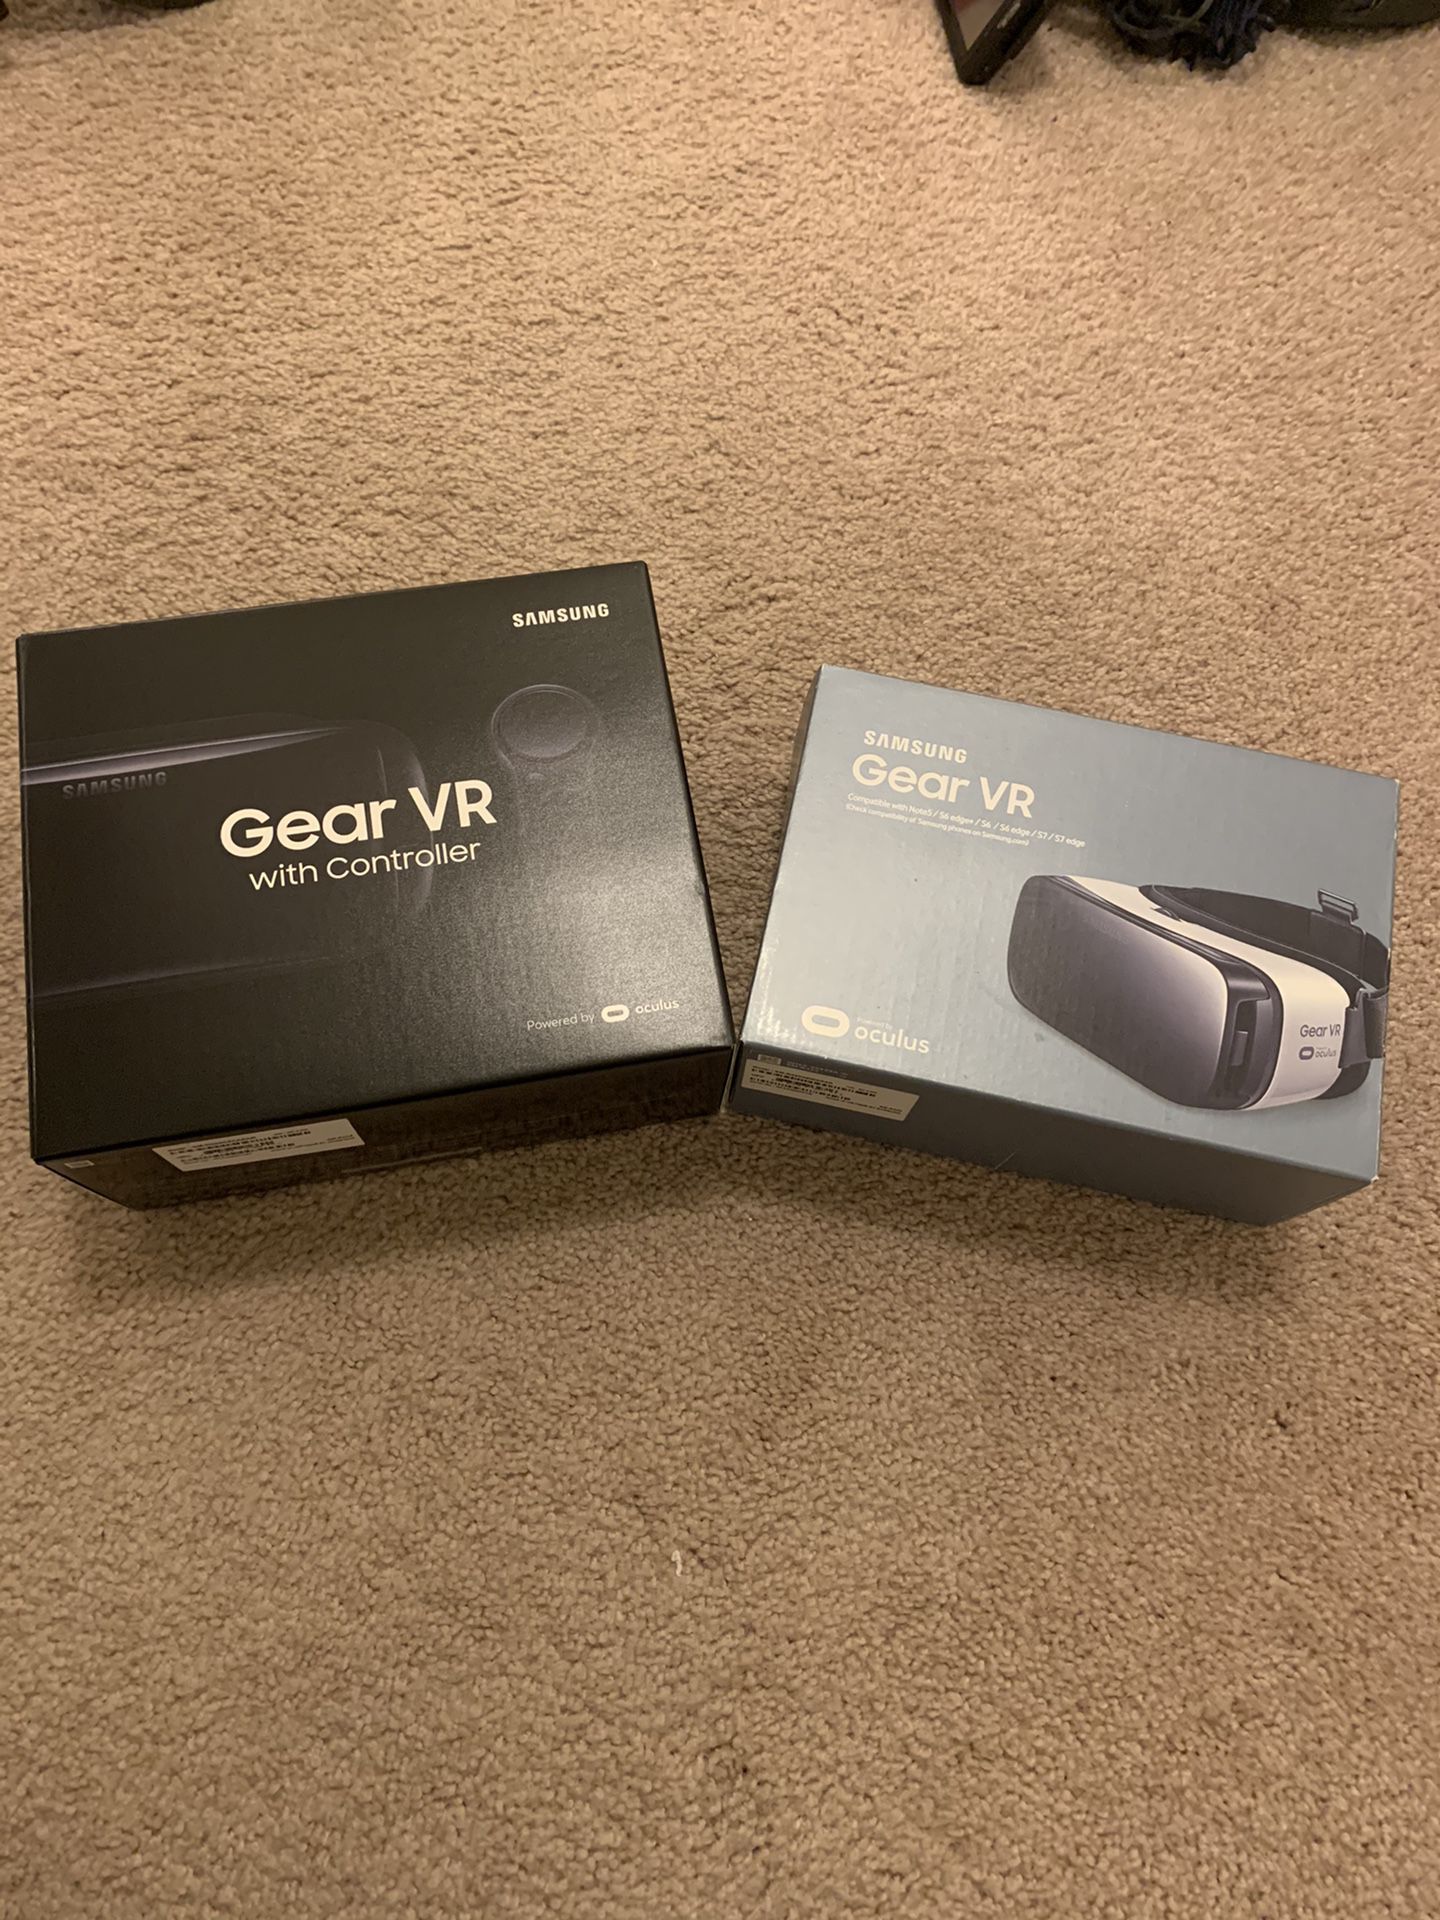 Gear VR 1 and Gesr VR 2